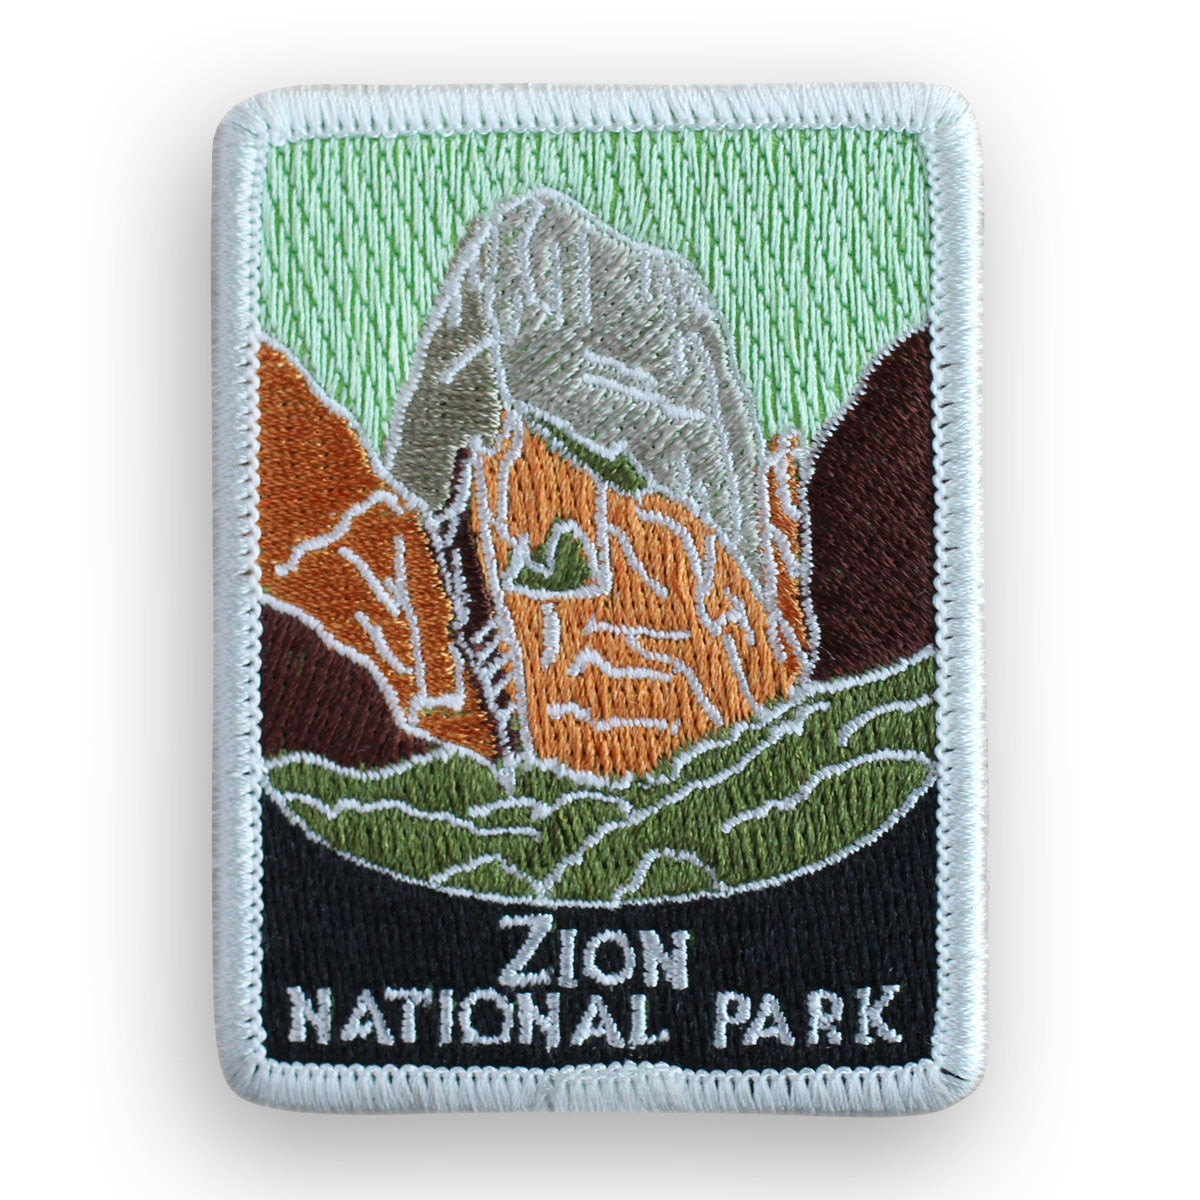 Zion National Park Traveler Patch